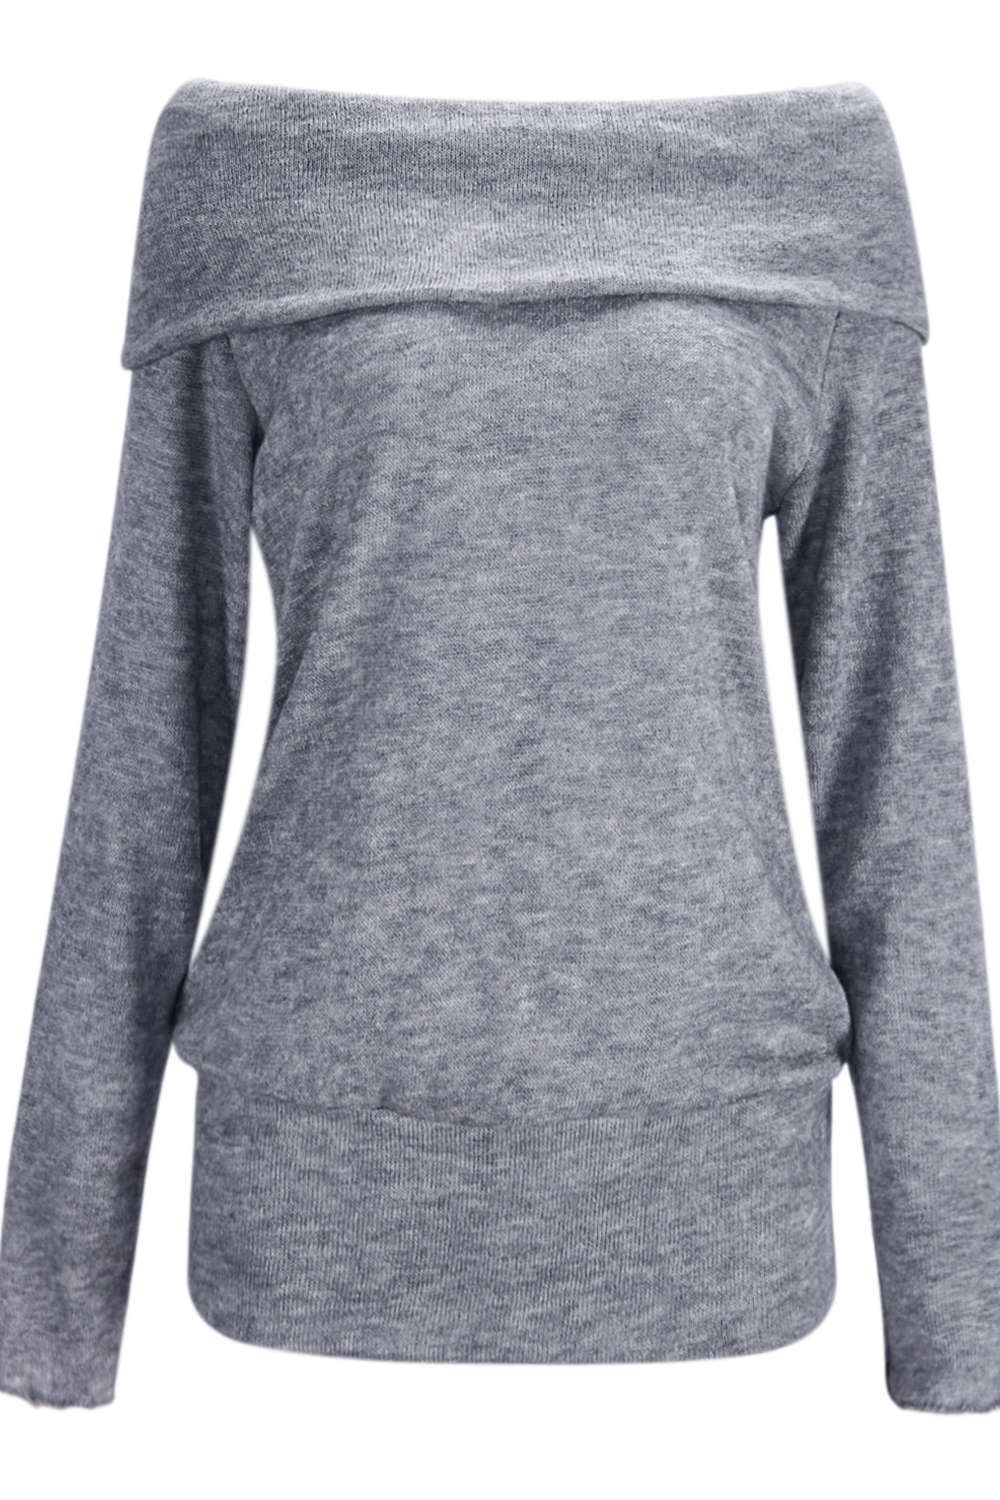 Iyasson Women's Off-shoulder Sweater